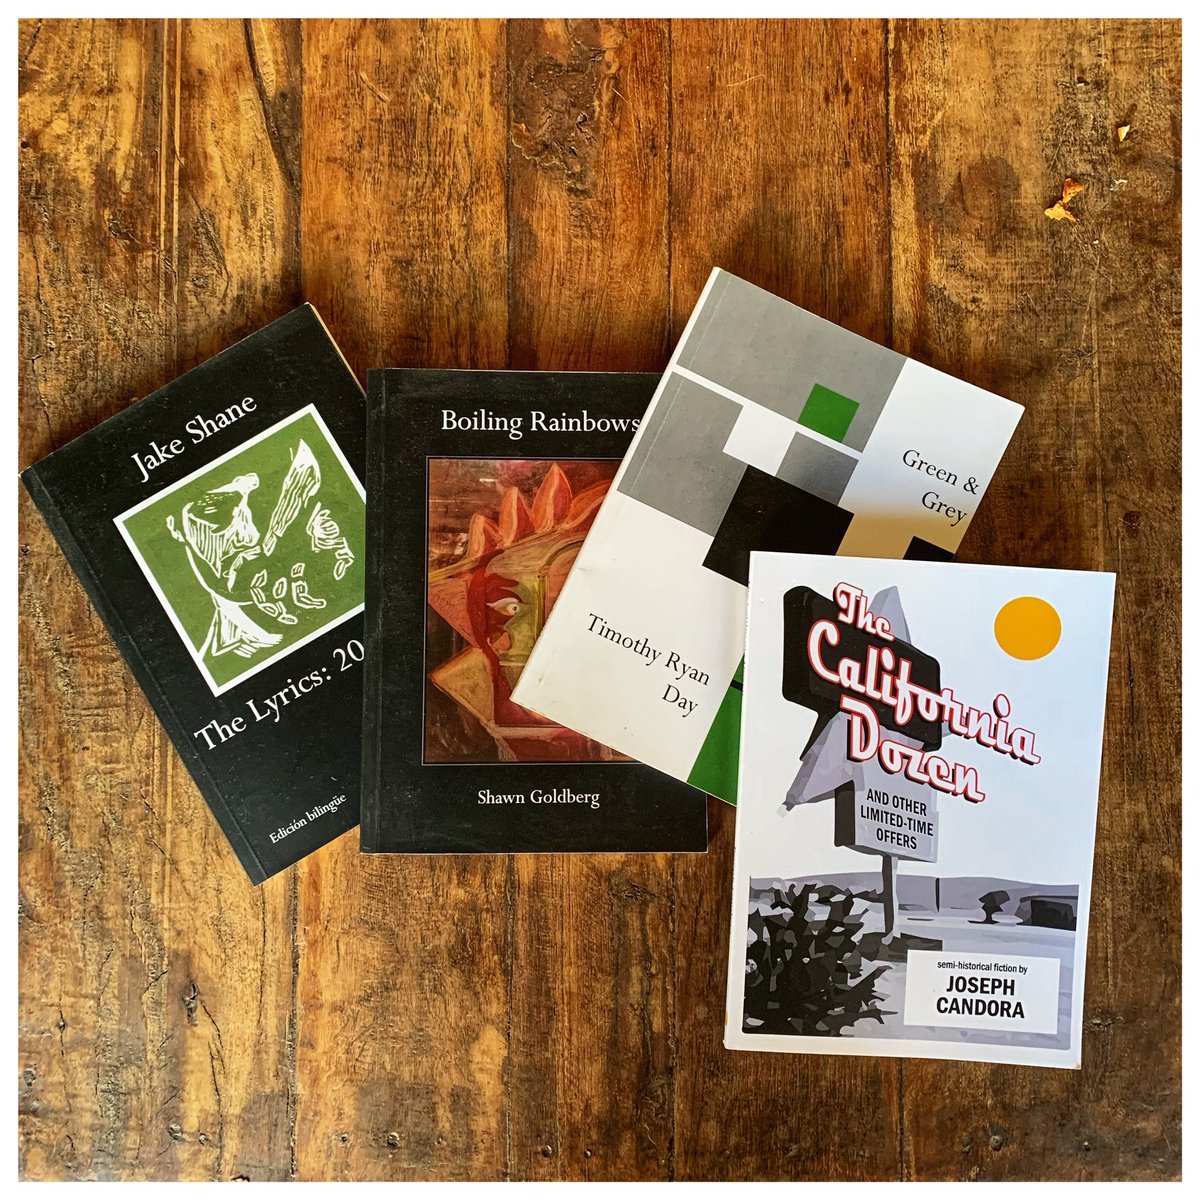 The books of Lemon Street Press @JakeShaneMusic @tryanday #smallpress #independentbooks #poetry #lyrics and #shortstories